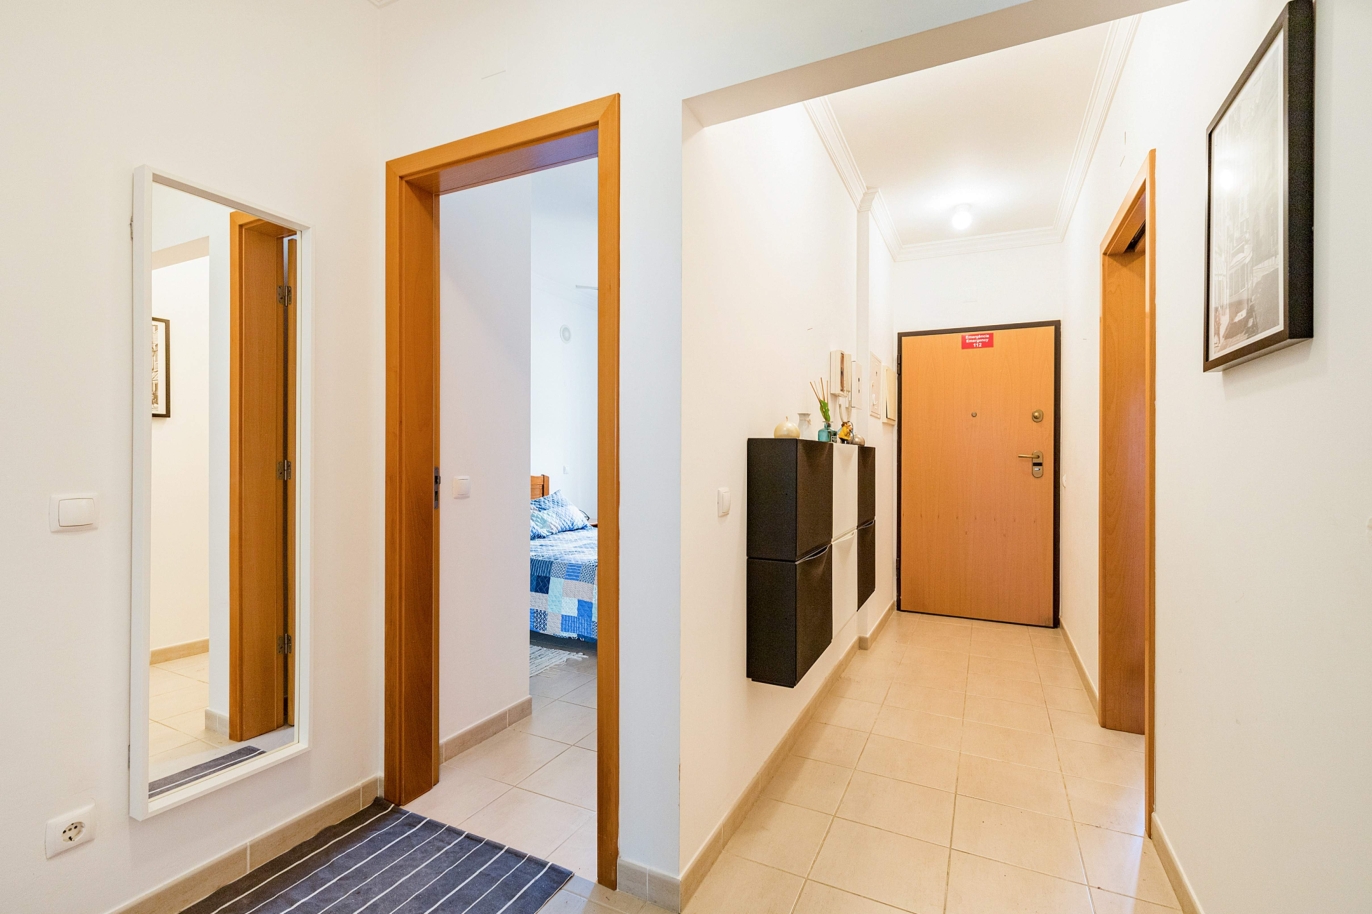 Apartamento T2, em condominio, para venda, Albufeira, Algarve_201443